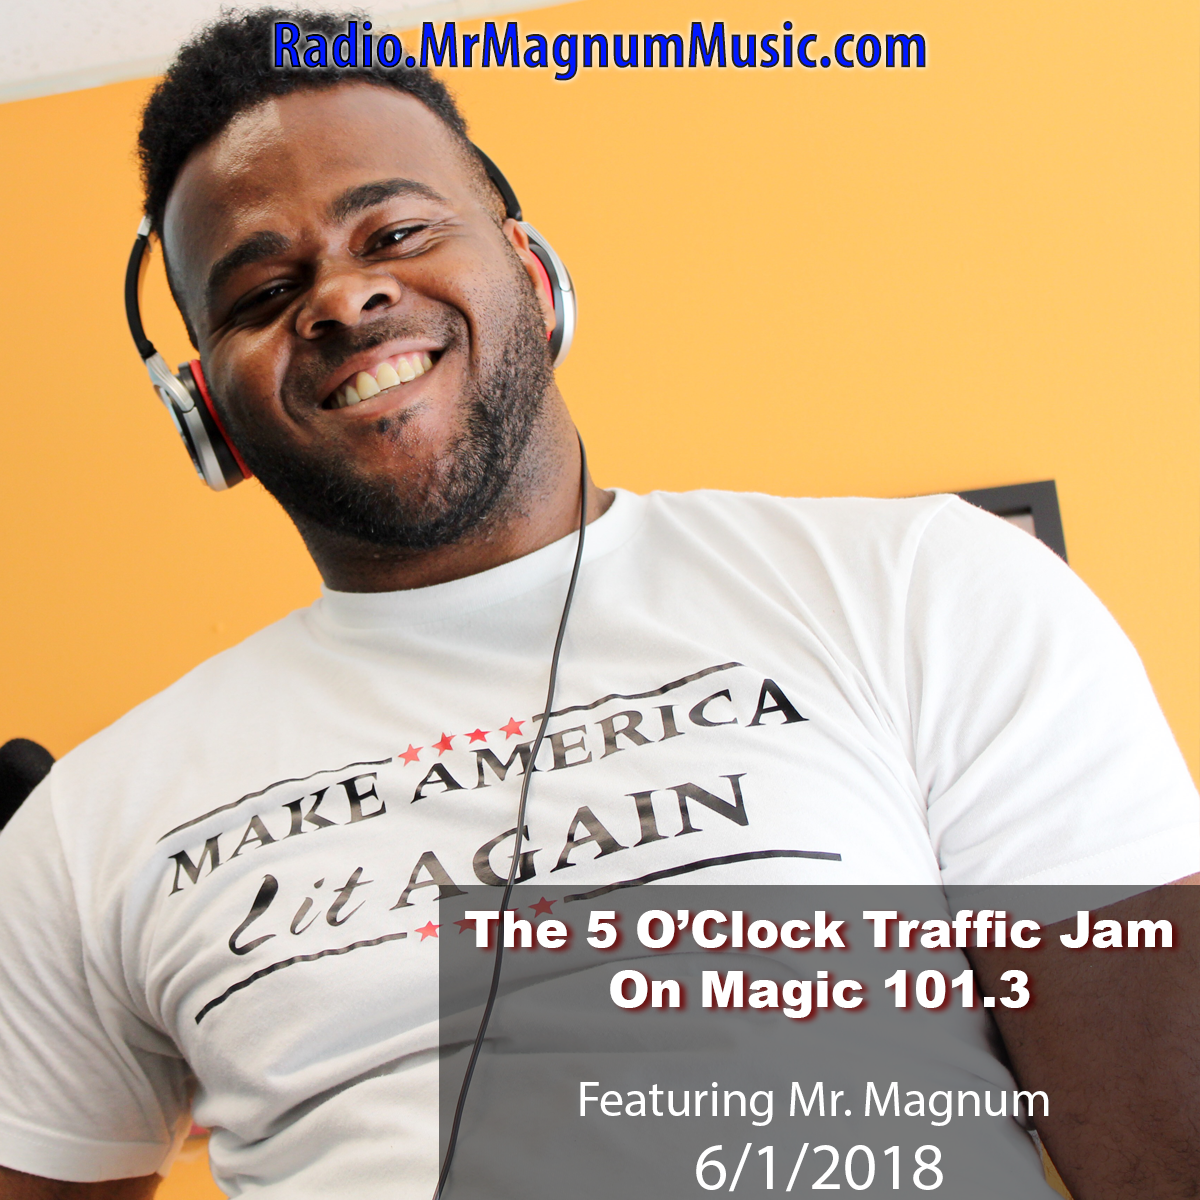 The 5 O'Clock Traffic Jam 20180606 featuring Gainesville's #1 DJ, Mr. Magnum on Magic 101.3